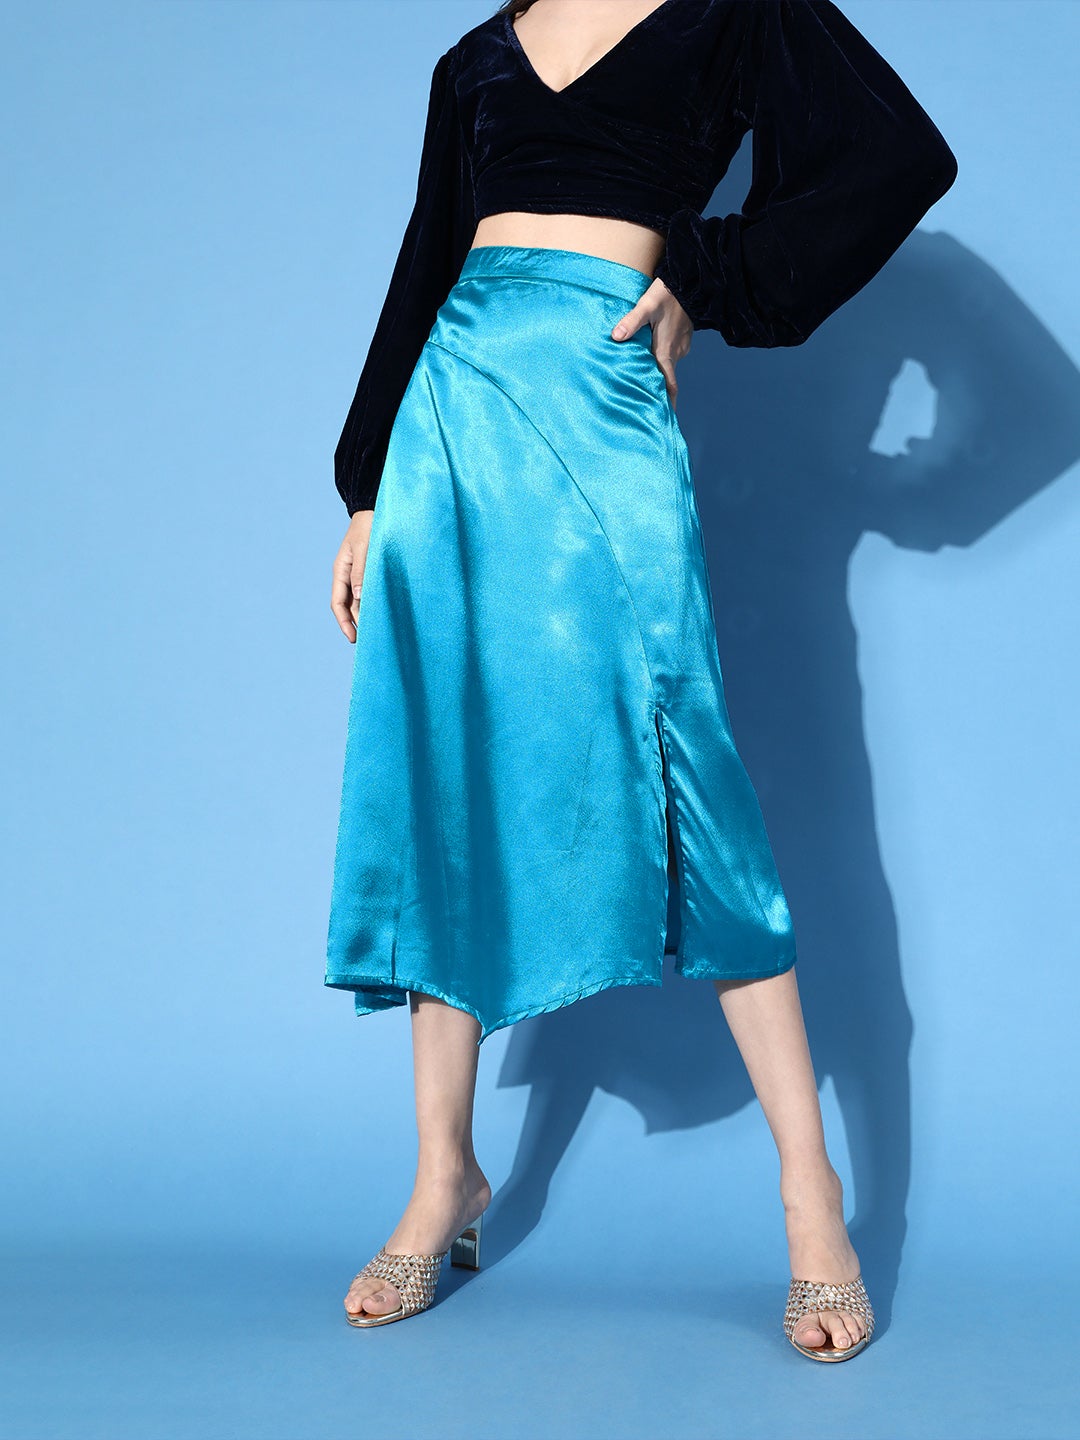 Solid Aqua Blue Satin Skirt